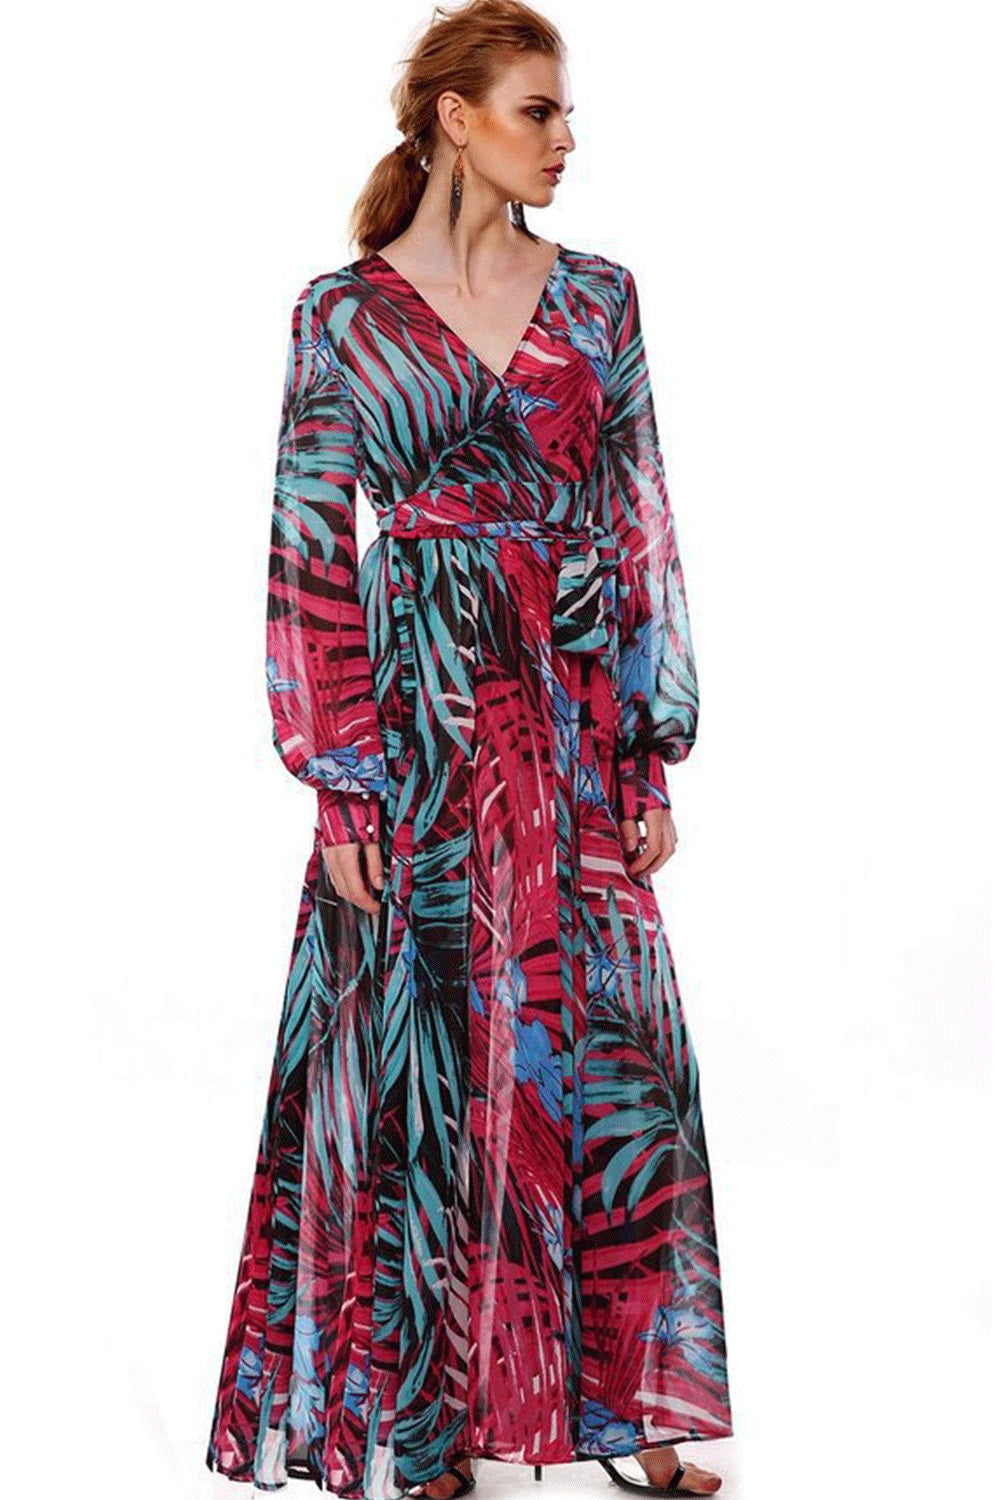 Ketty More Women Chiffon Multi Colors V-Neck Long Dress-KMWD338